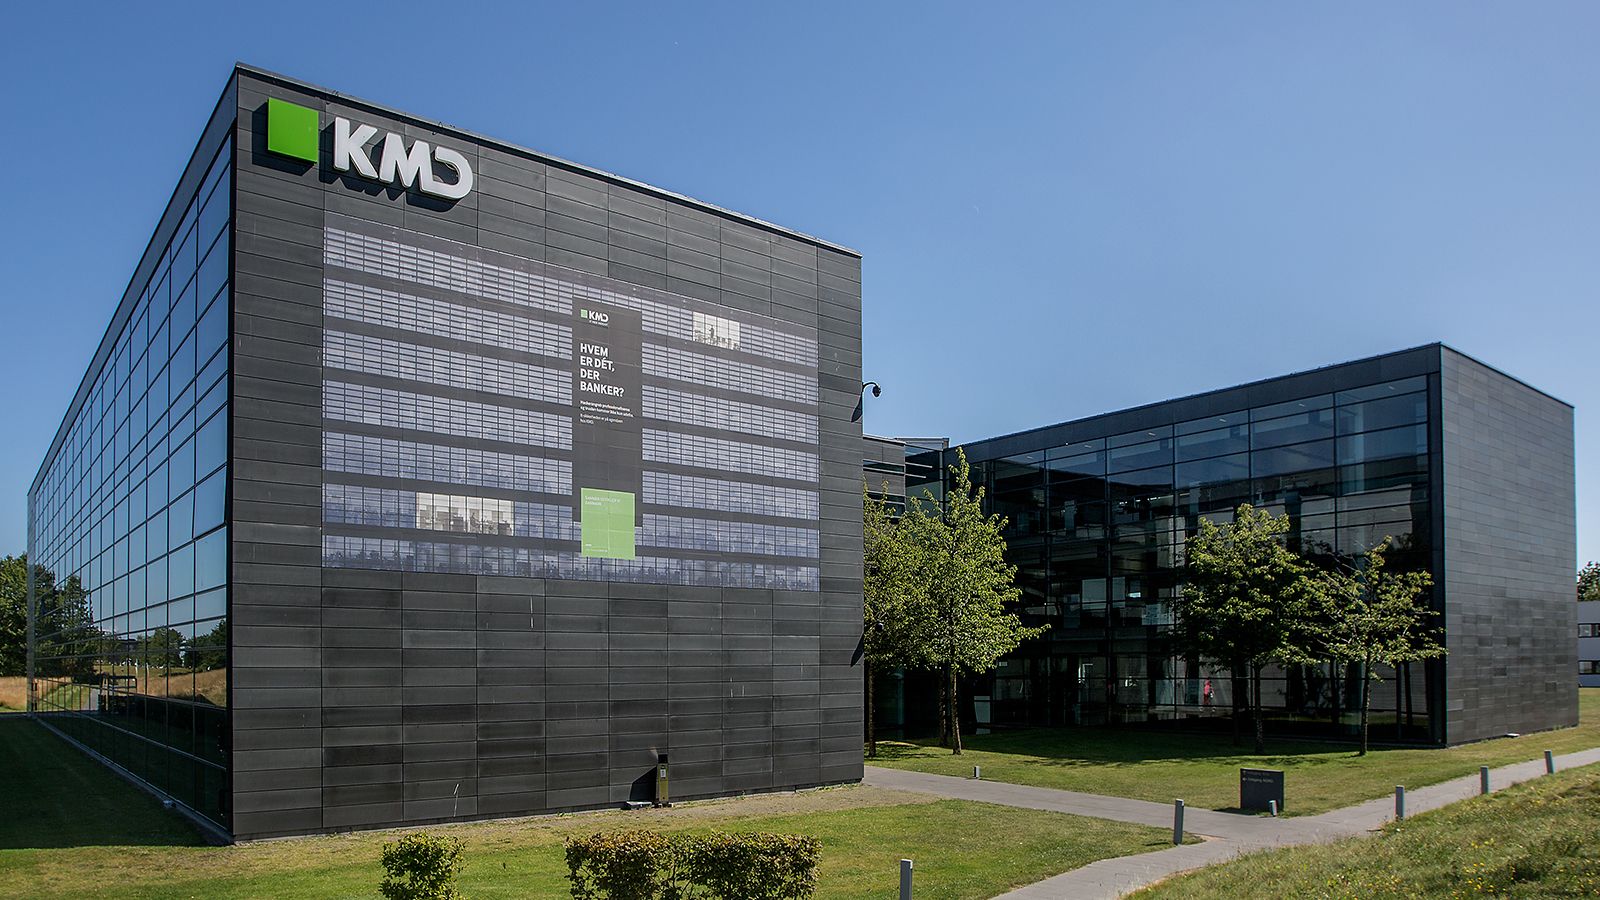 KMD headquarters in Ballerup, Denmark